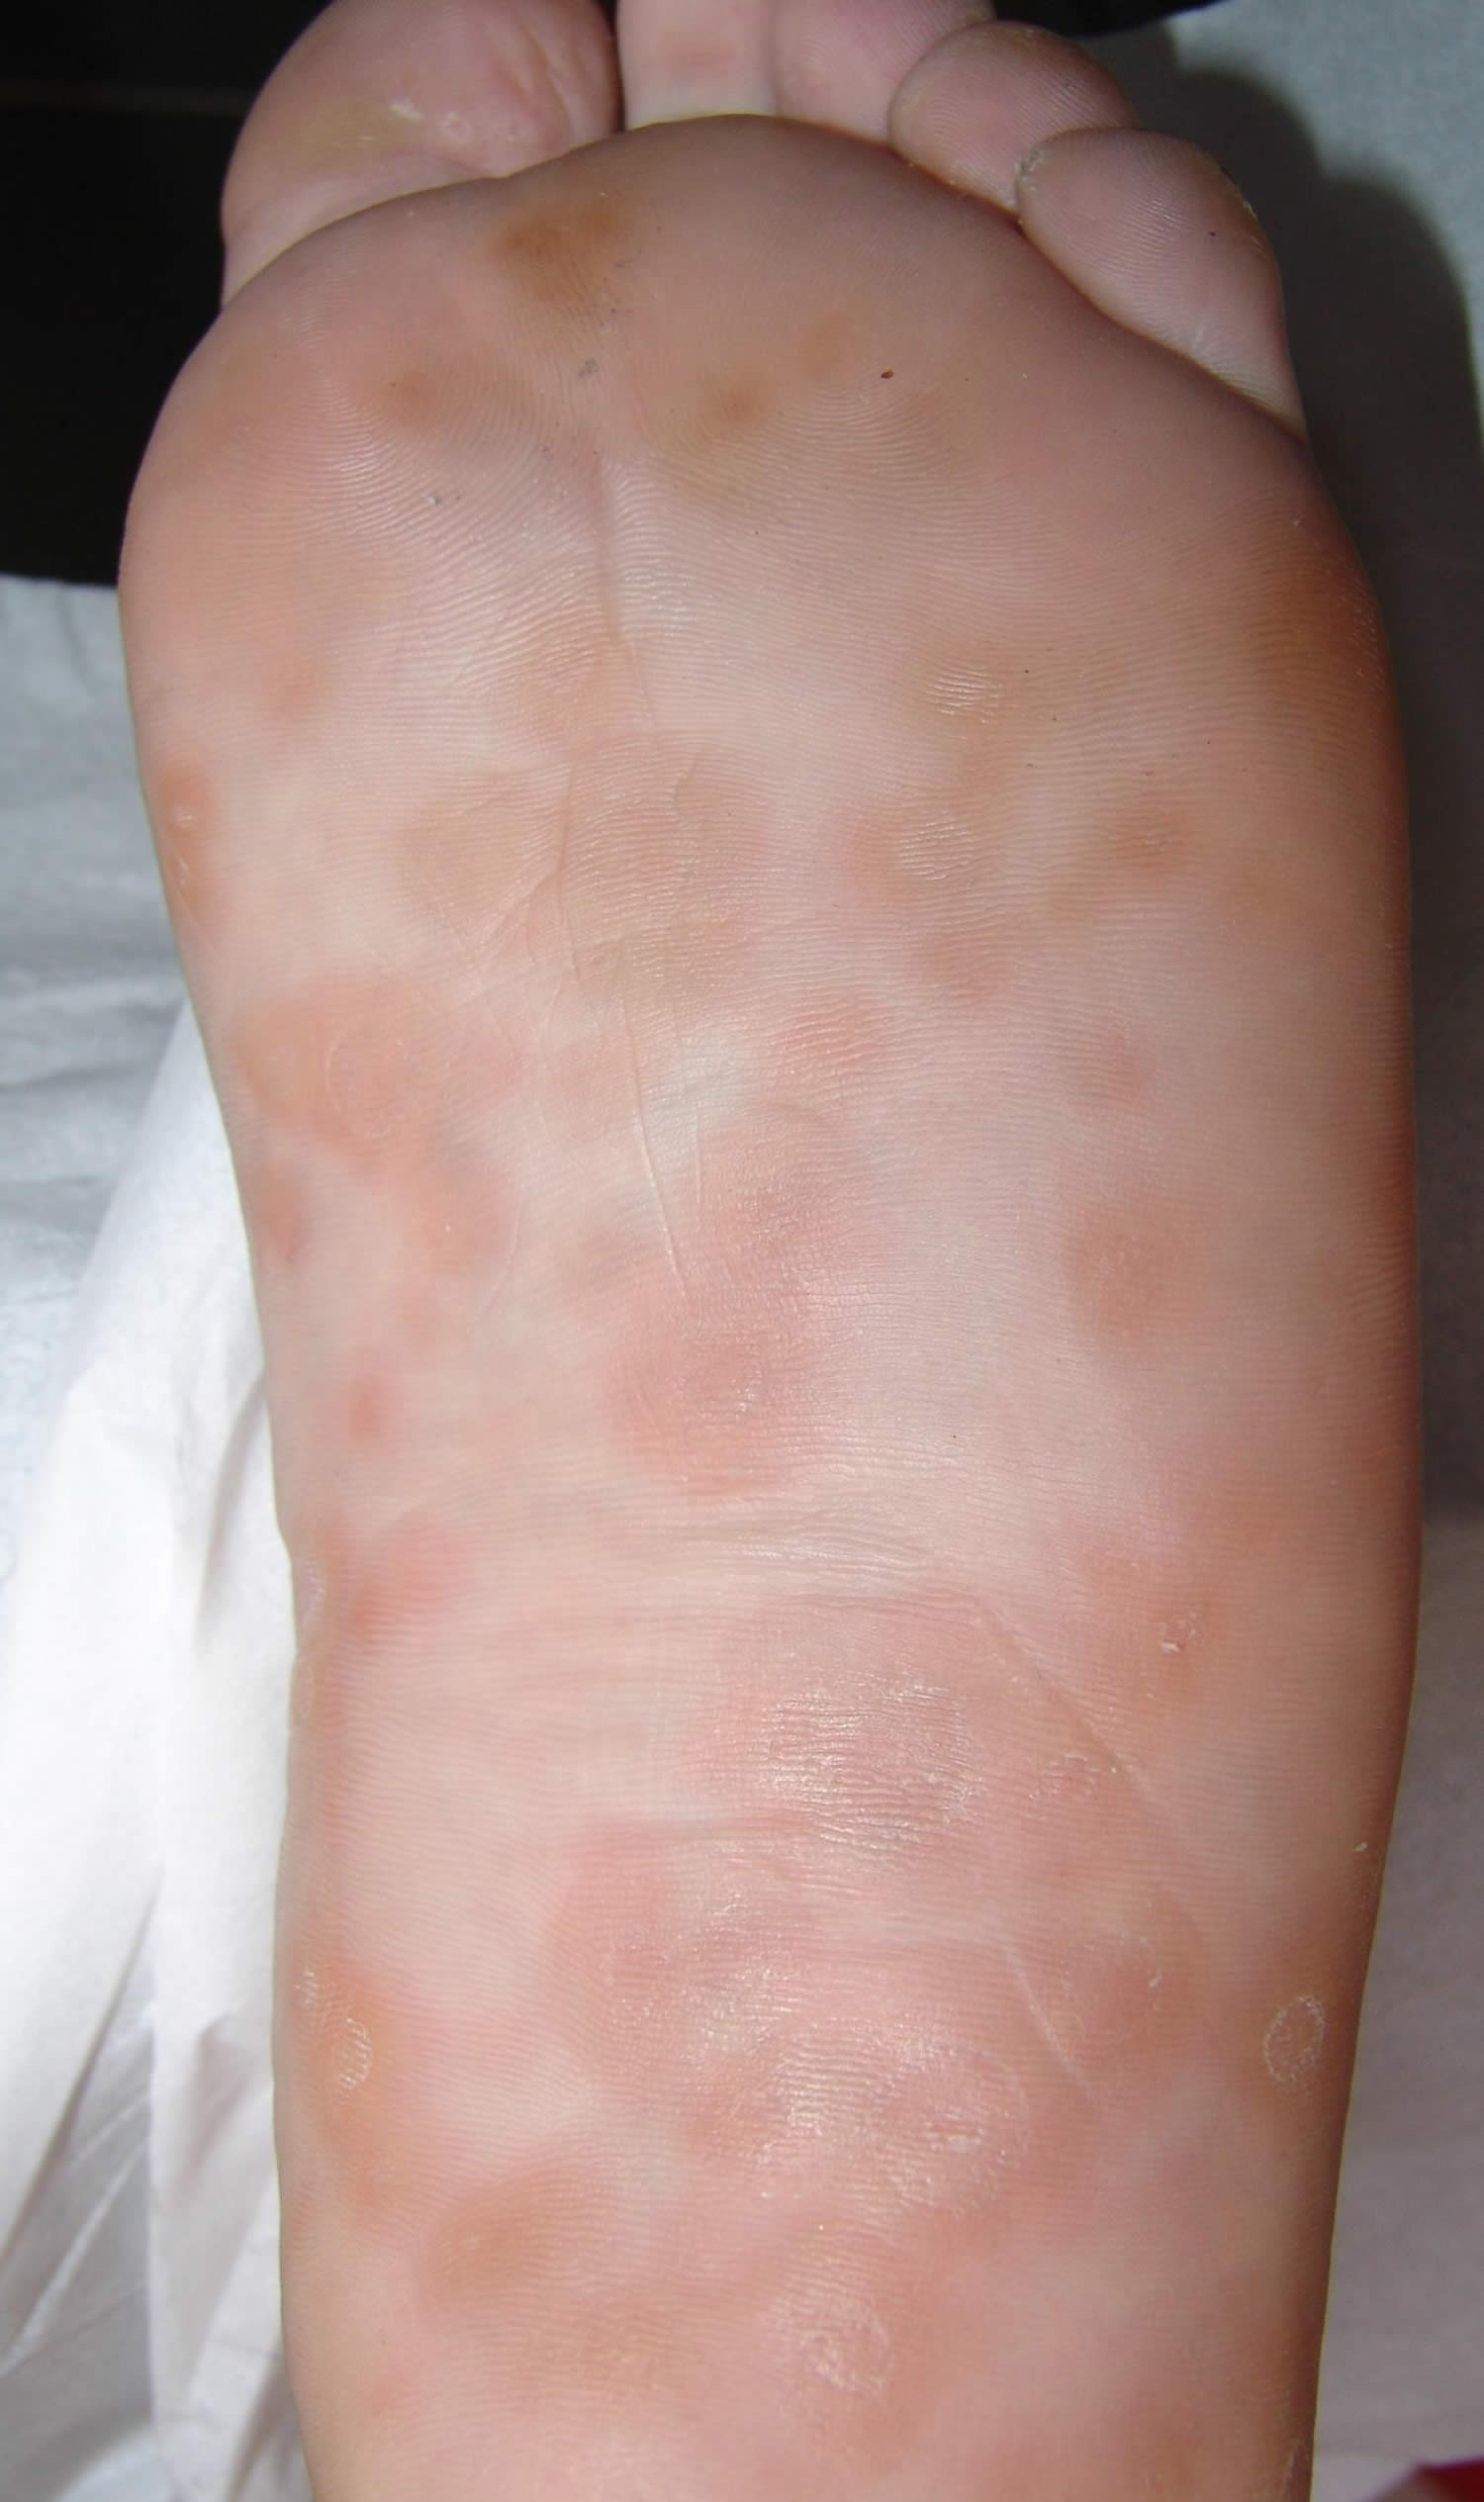 Secondary syphilis foot rash